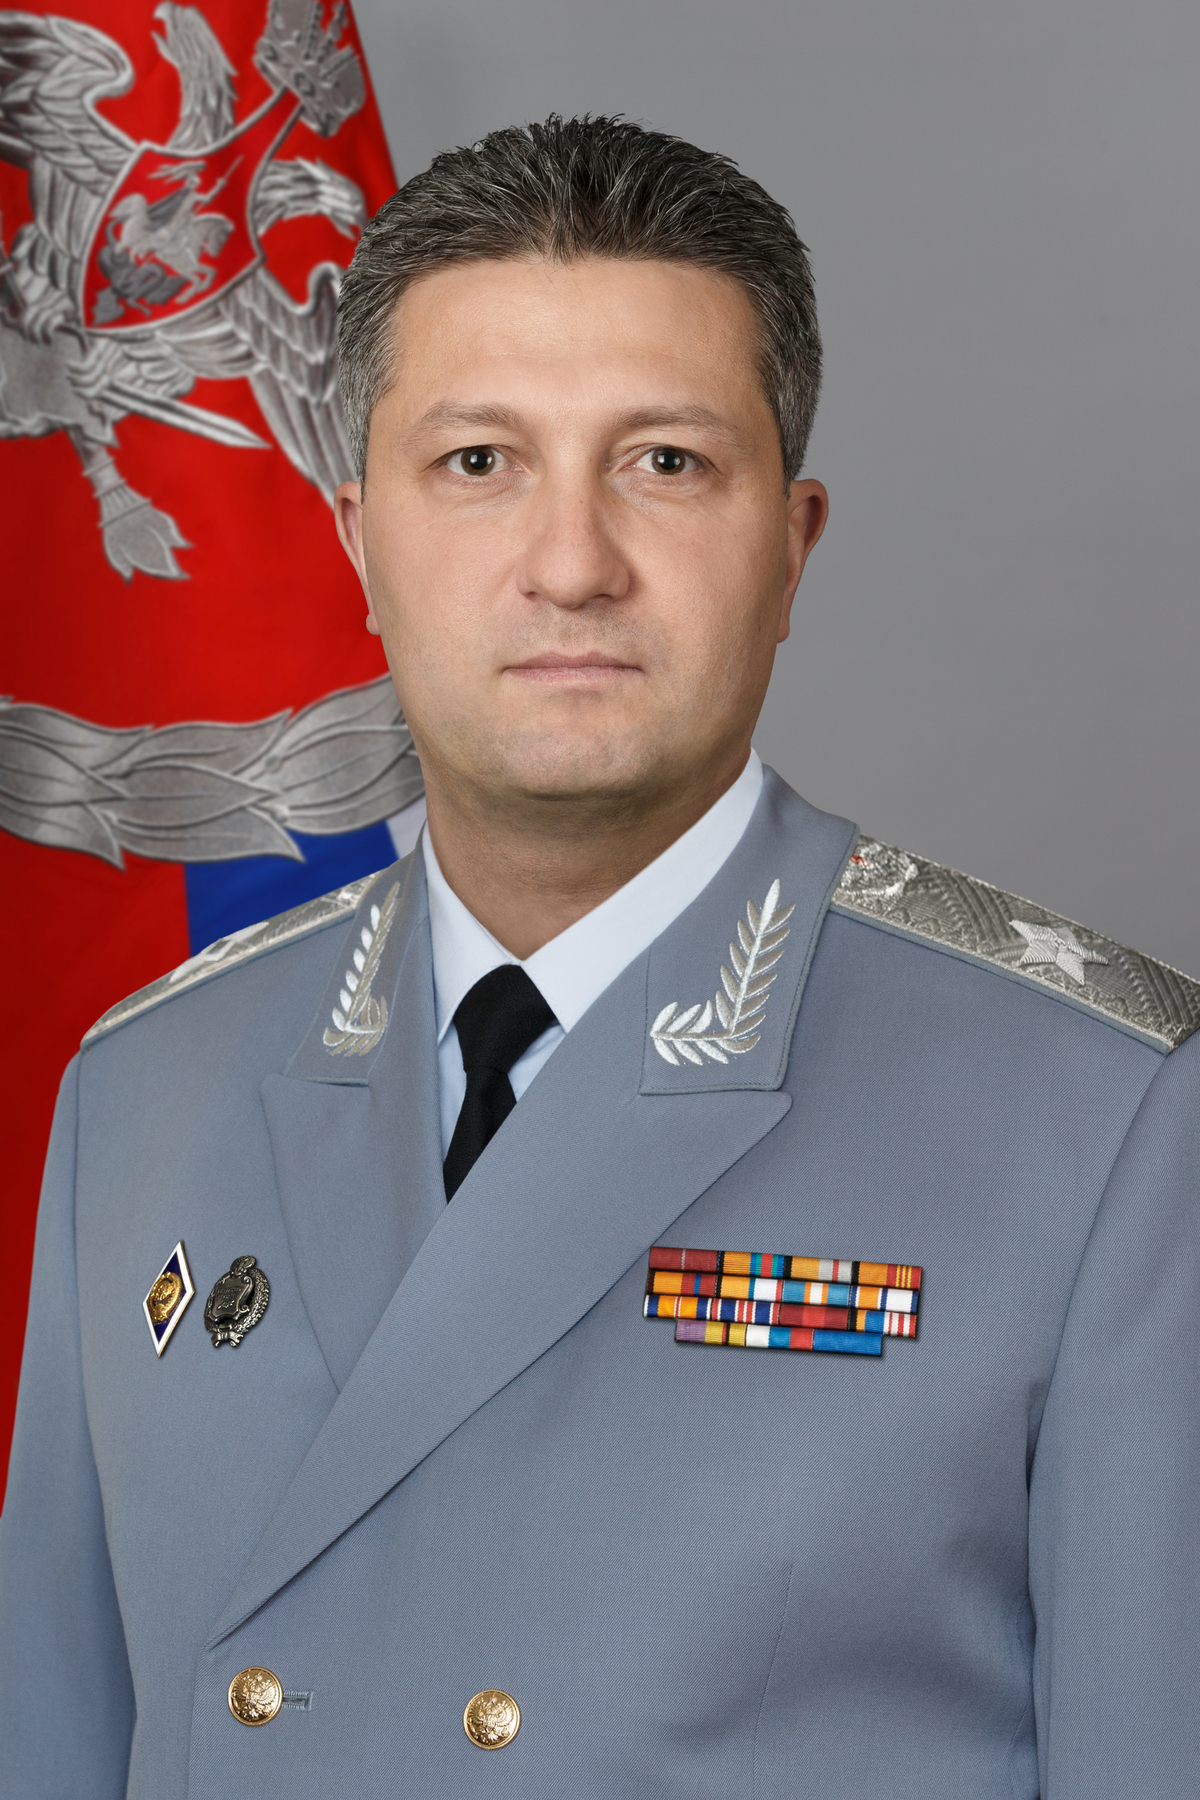 Timur Ivanov